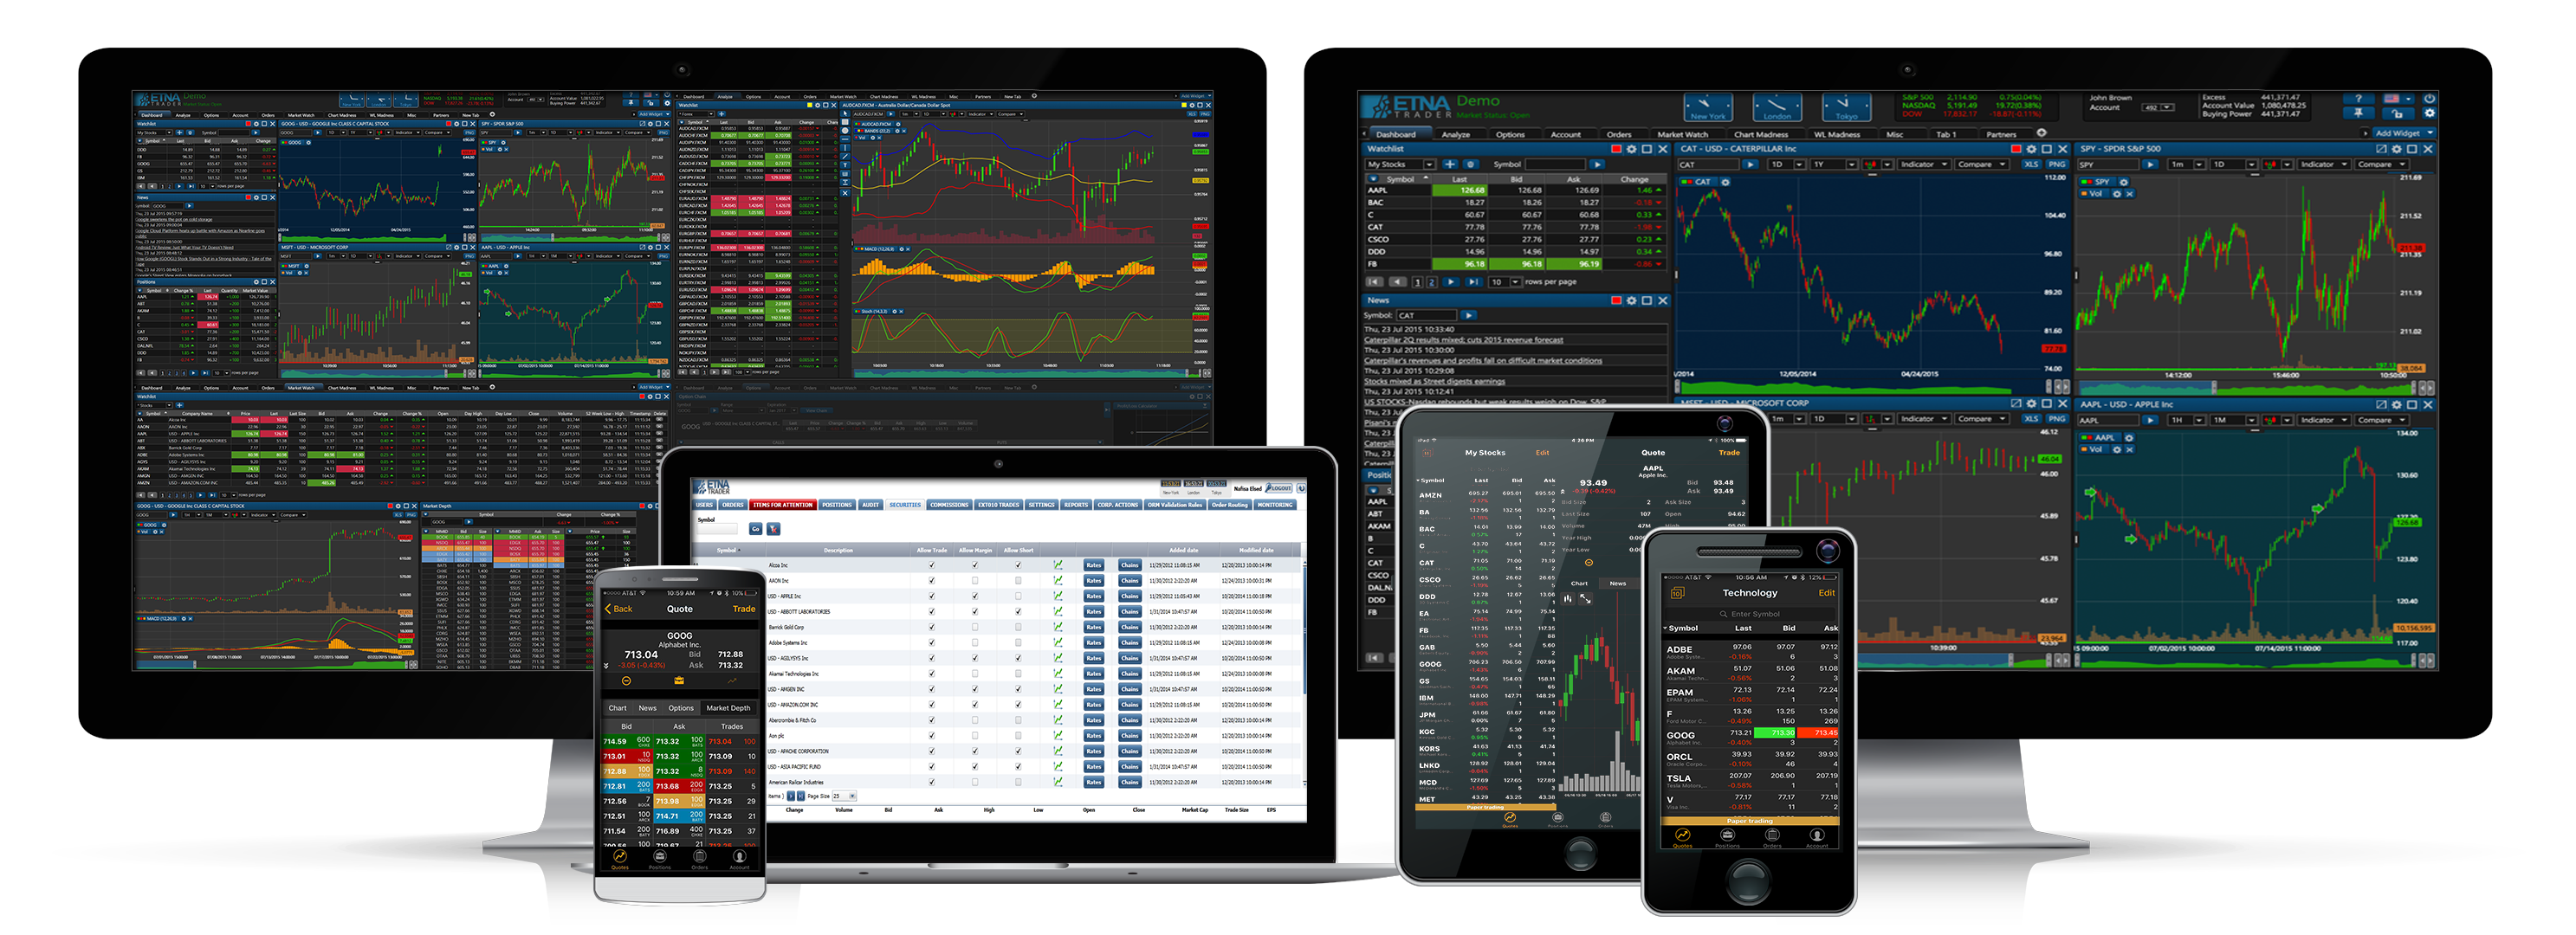 Demo Trading Software Virtual Stocks And Options Trading Etna Trader - 